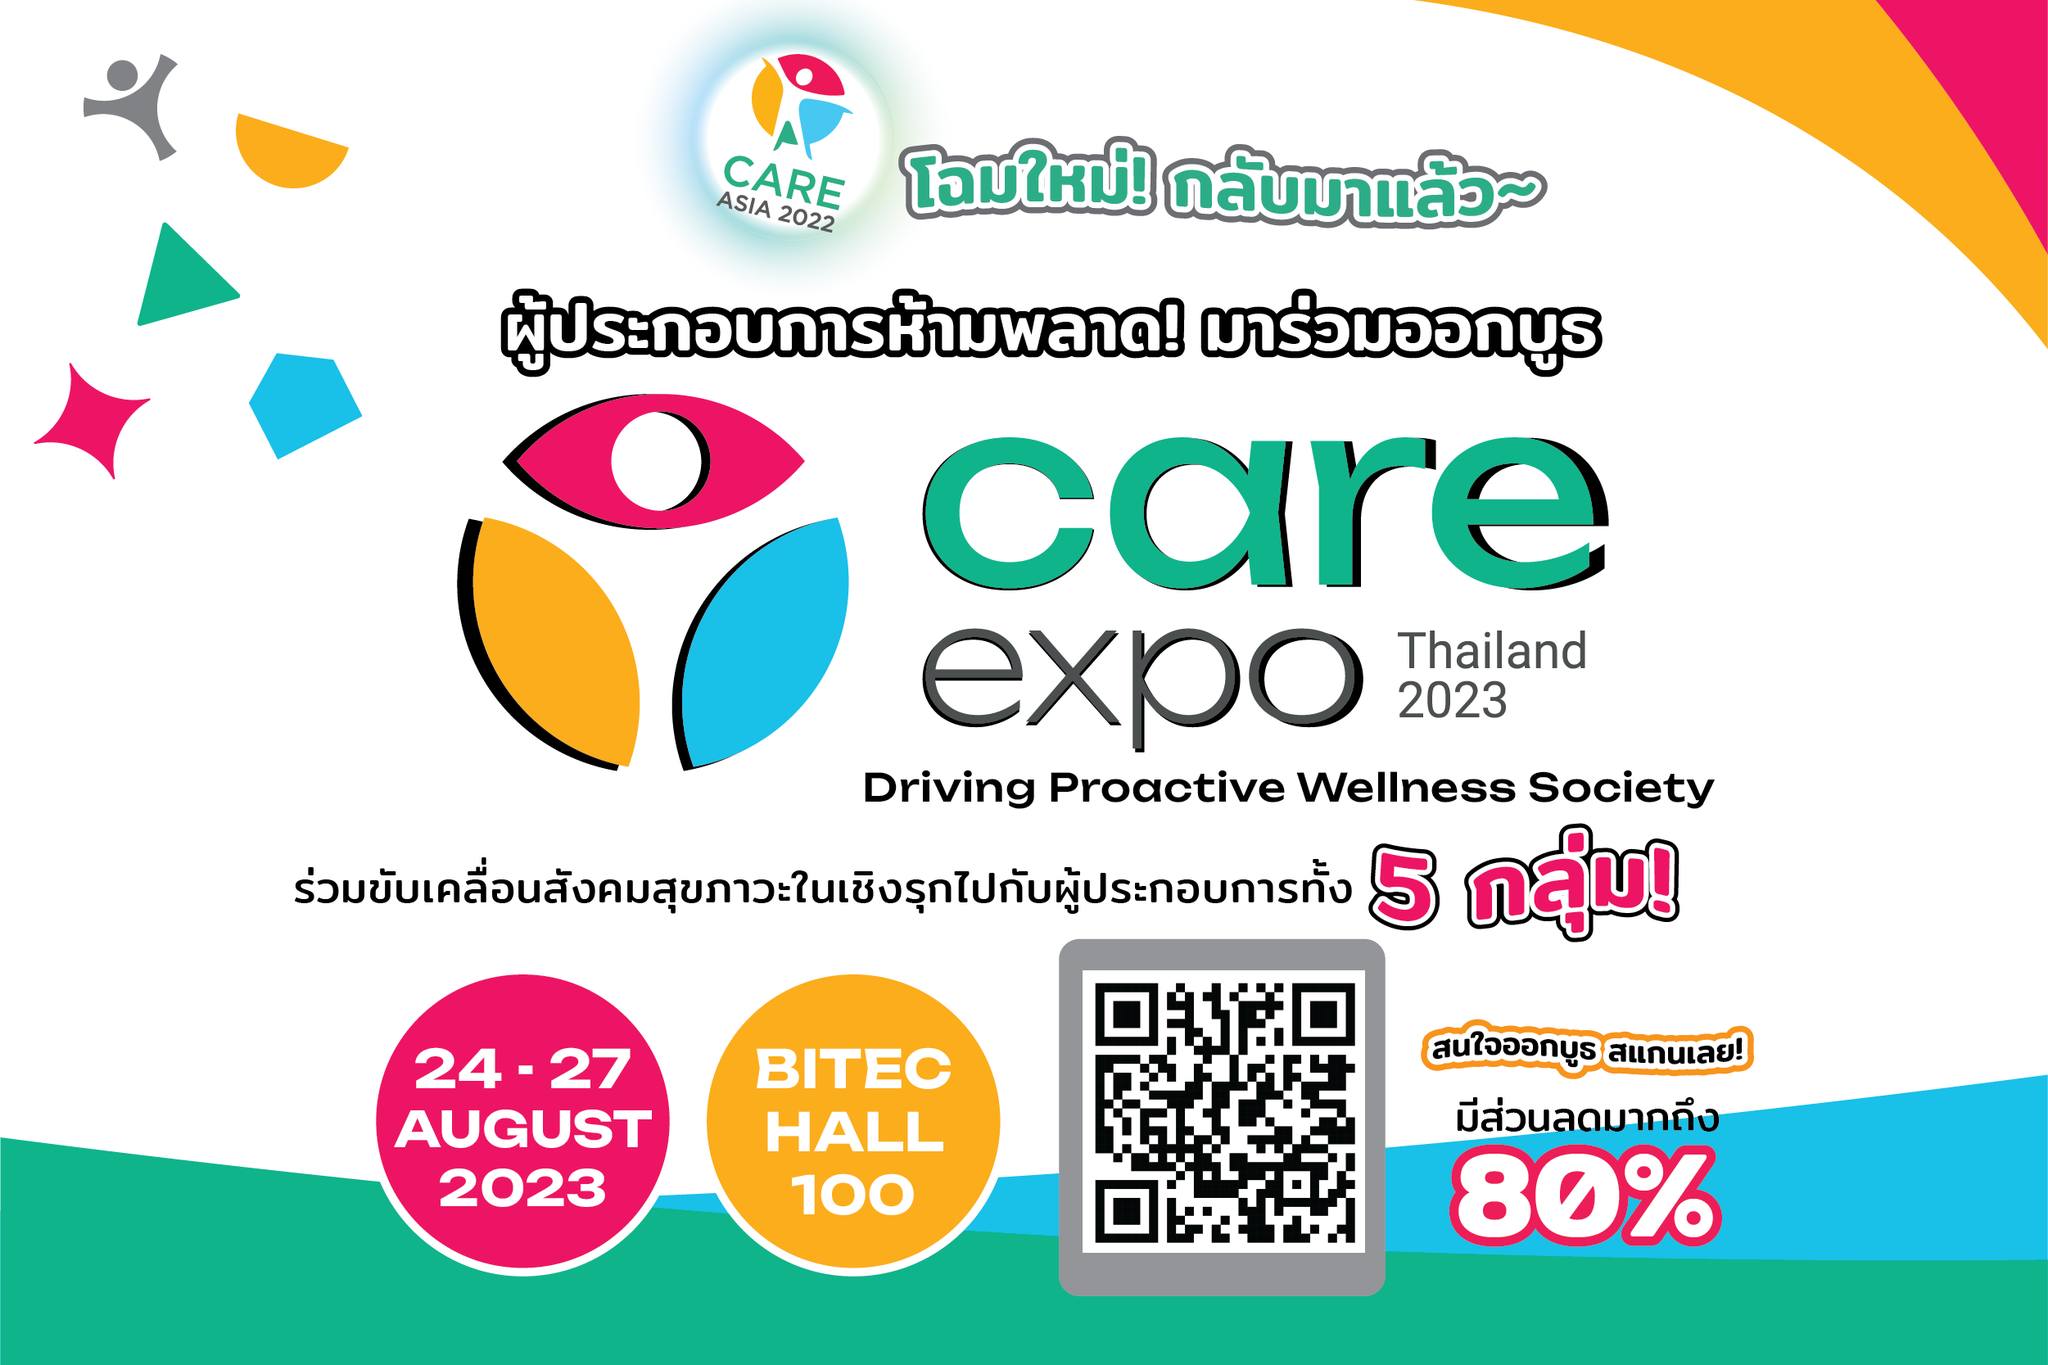 CARE EXPO Thailand 2023